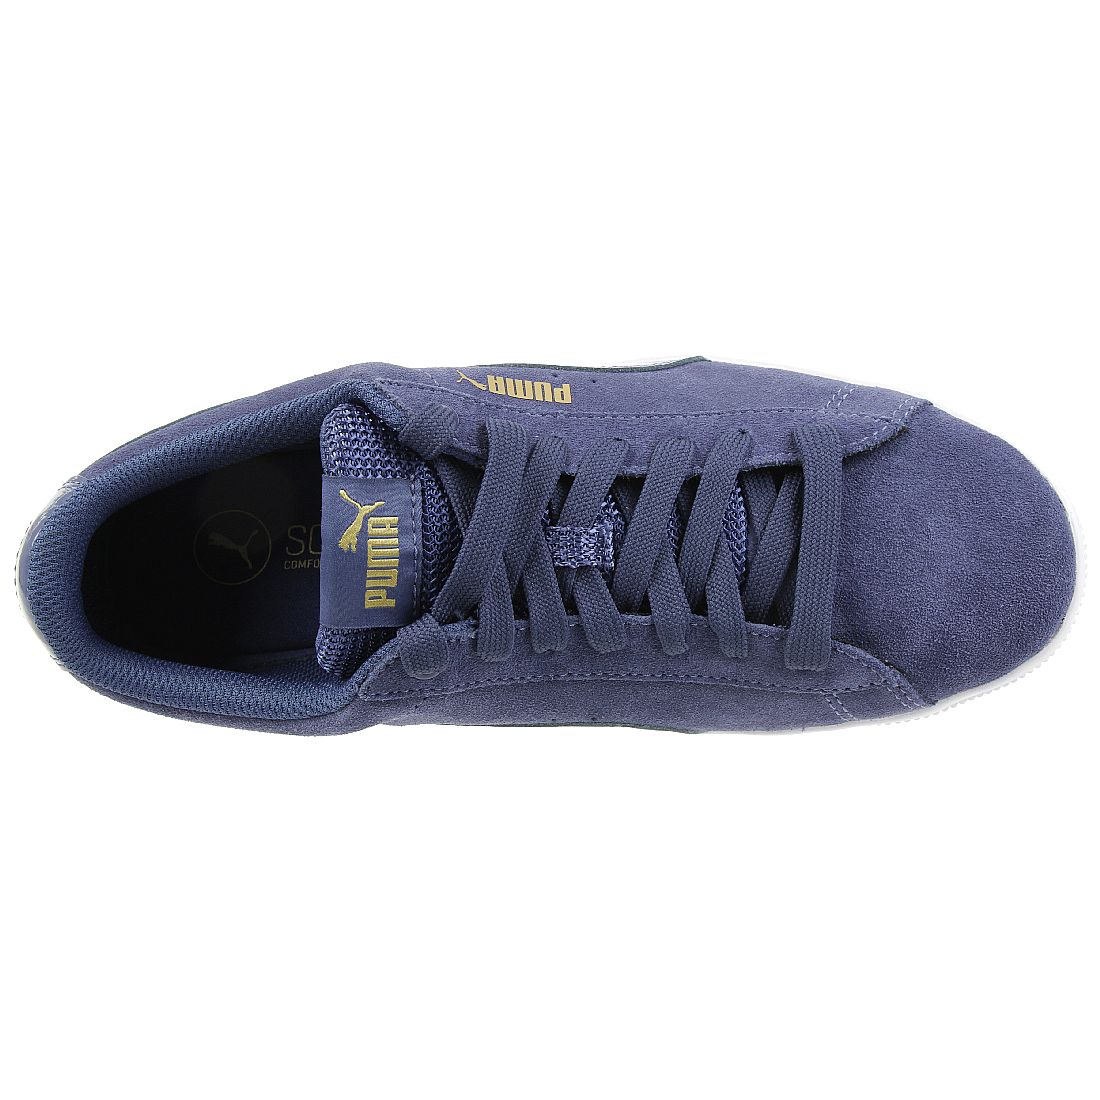 Puma Vikky Platform leather Sneaker Damen Schuhe 363287 13  blau